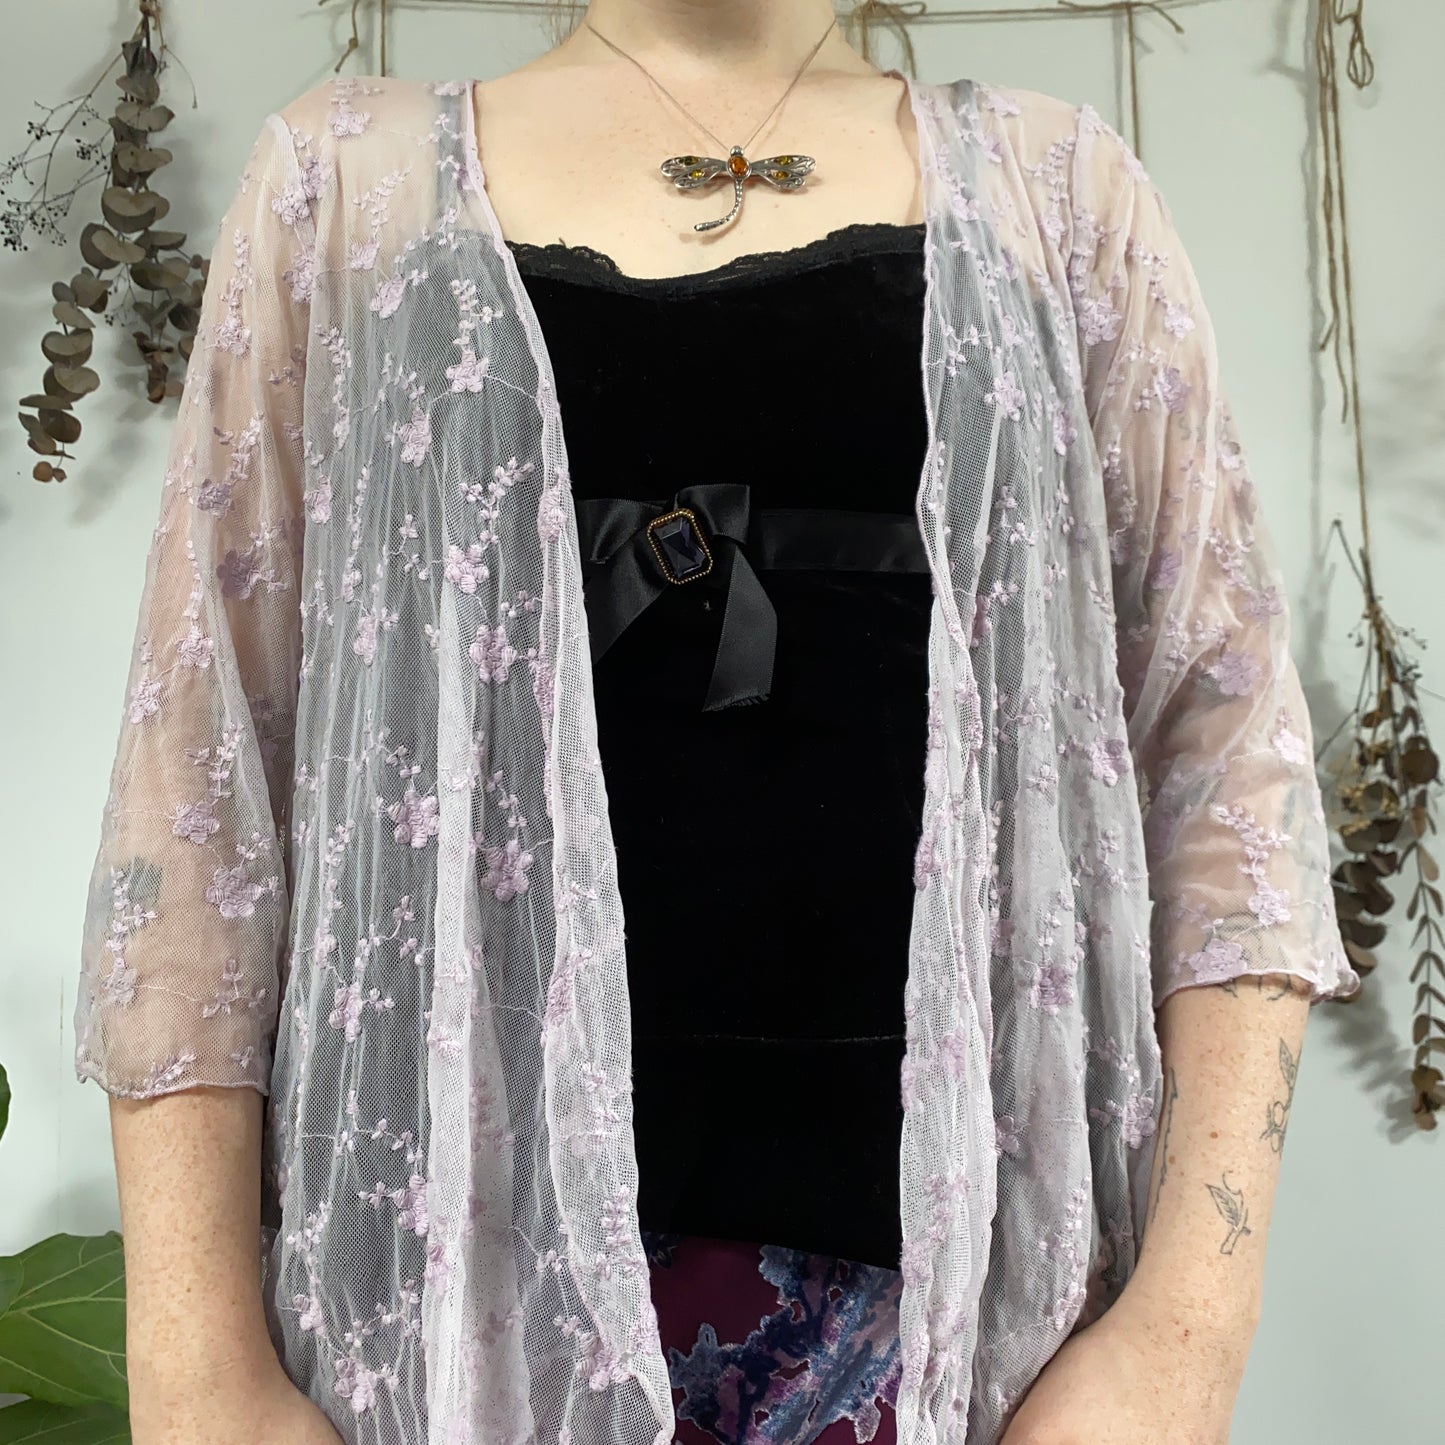 Lilac mesh cardigan - size L/XL